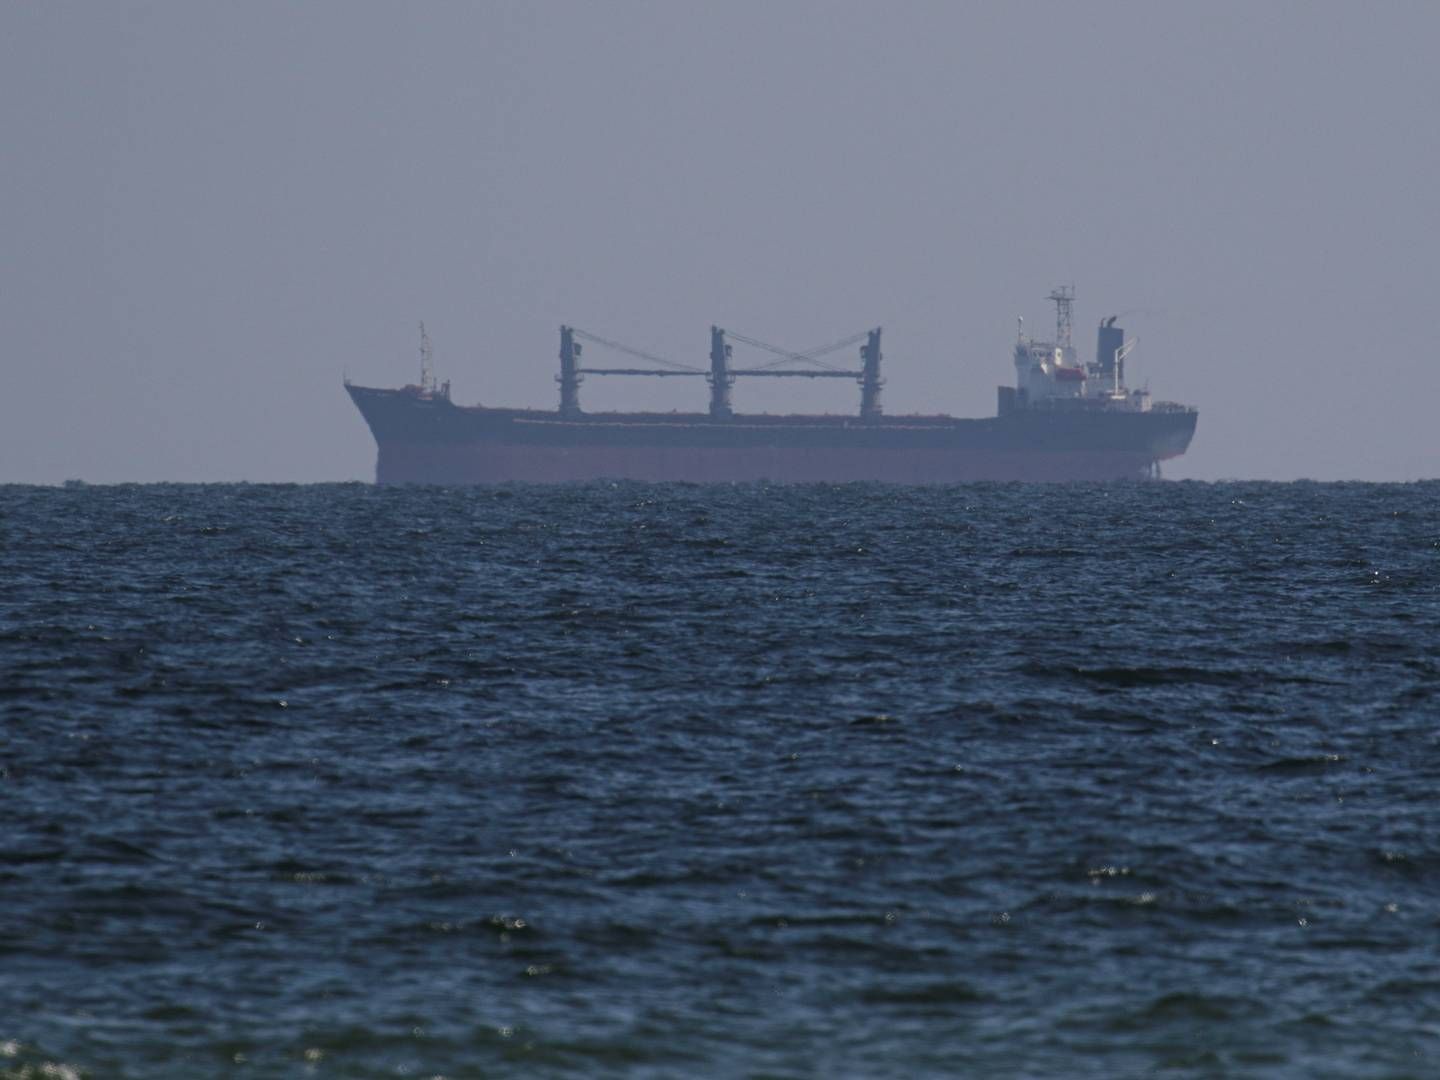 On Saturday, the bulk carrier Aroyat arrived in Chornomorsk to load grain. | Photo: Stringer